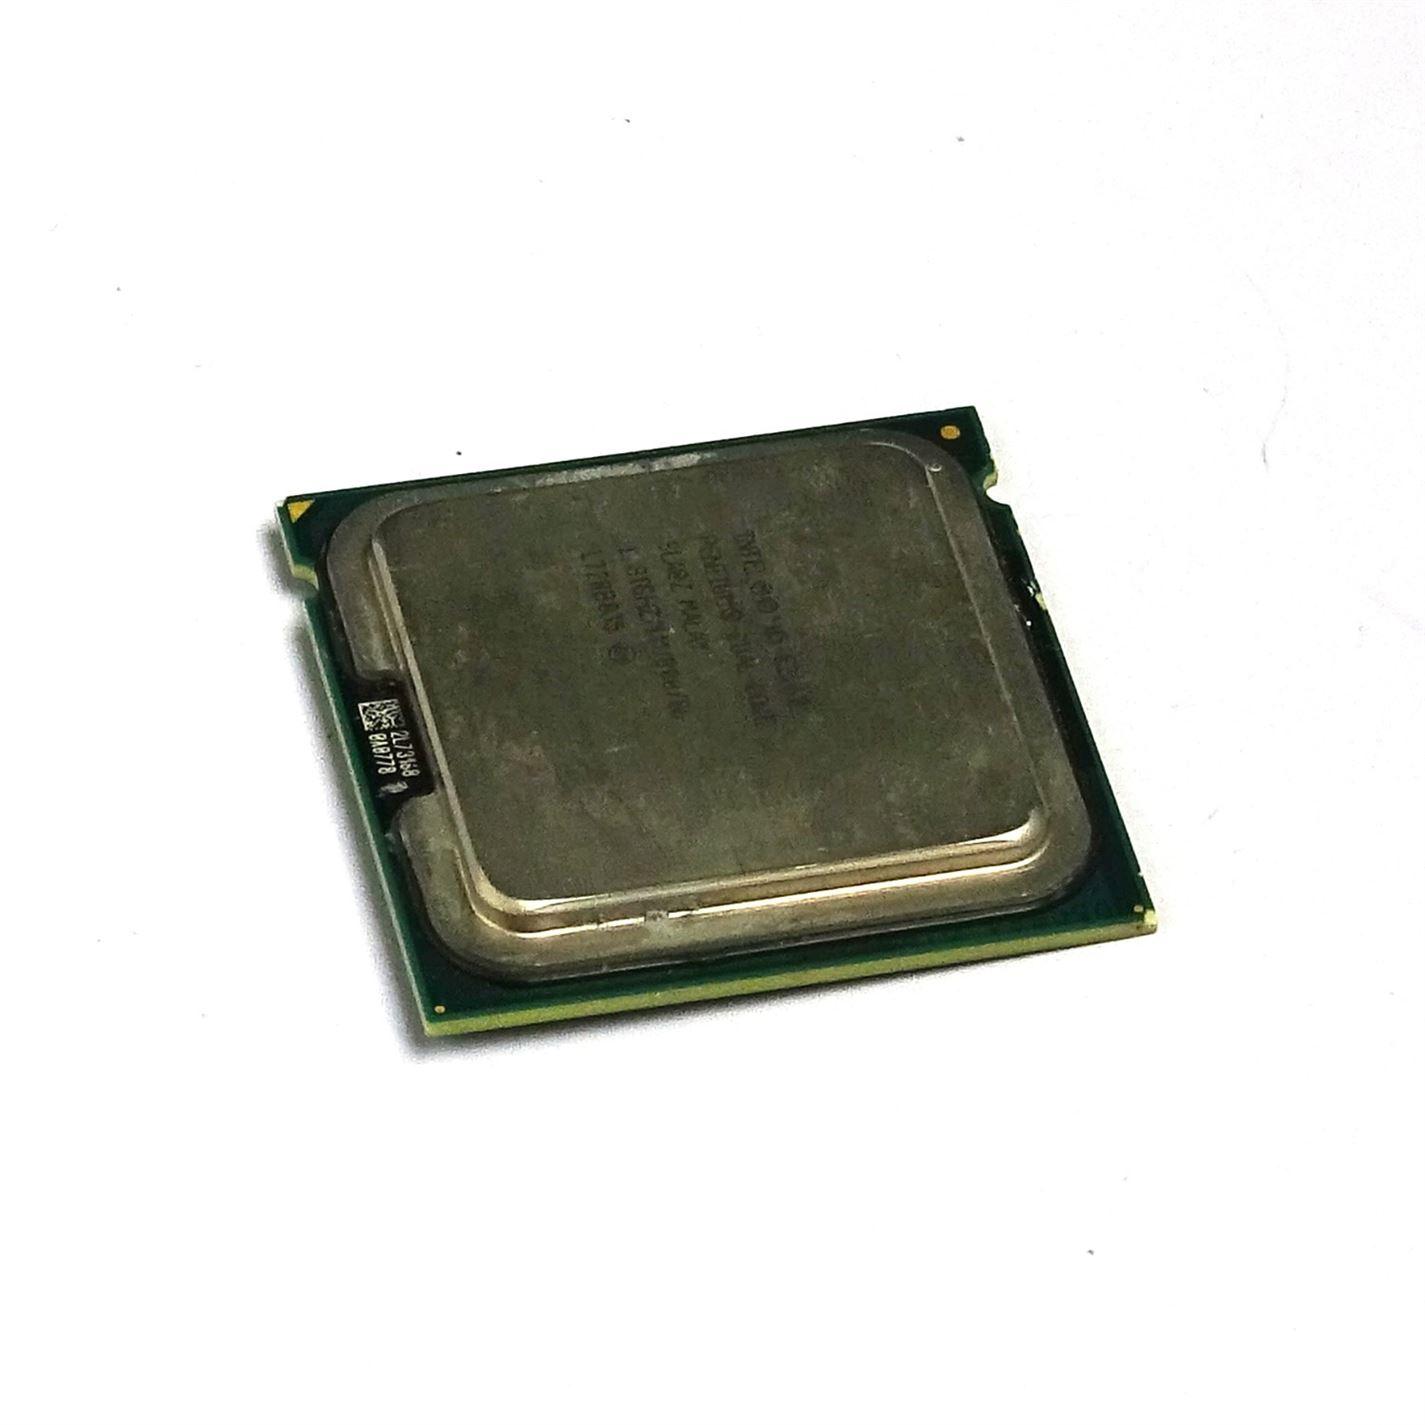 Pre-Owned Intel E2160 - PENTIUM DUAL CORE SLA8Z 1.8Ghz - UK Seller